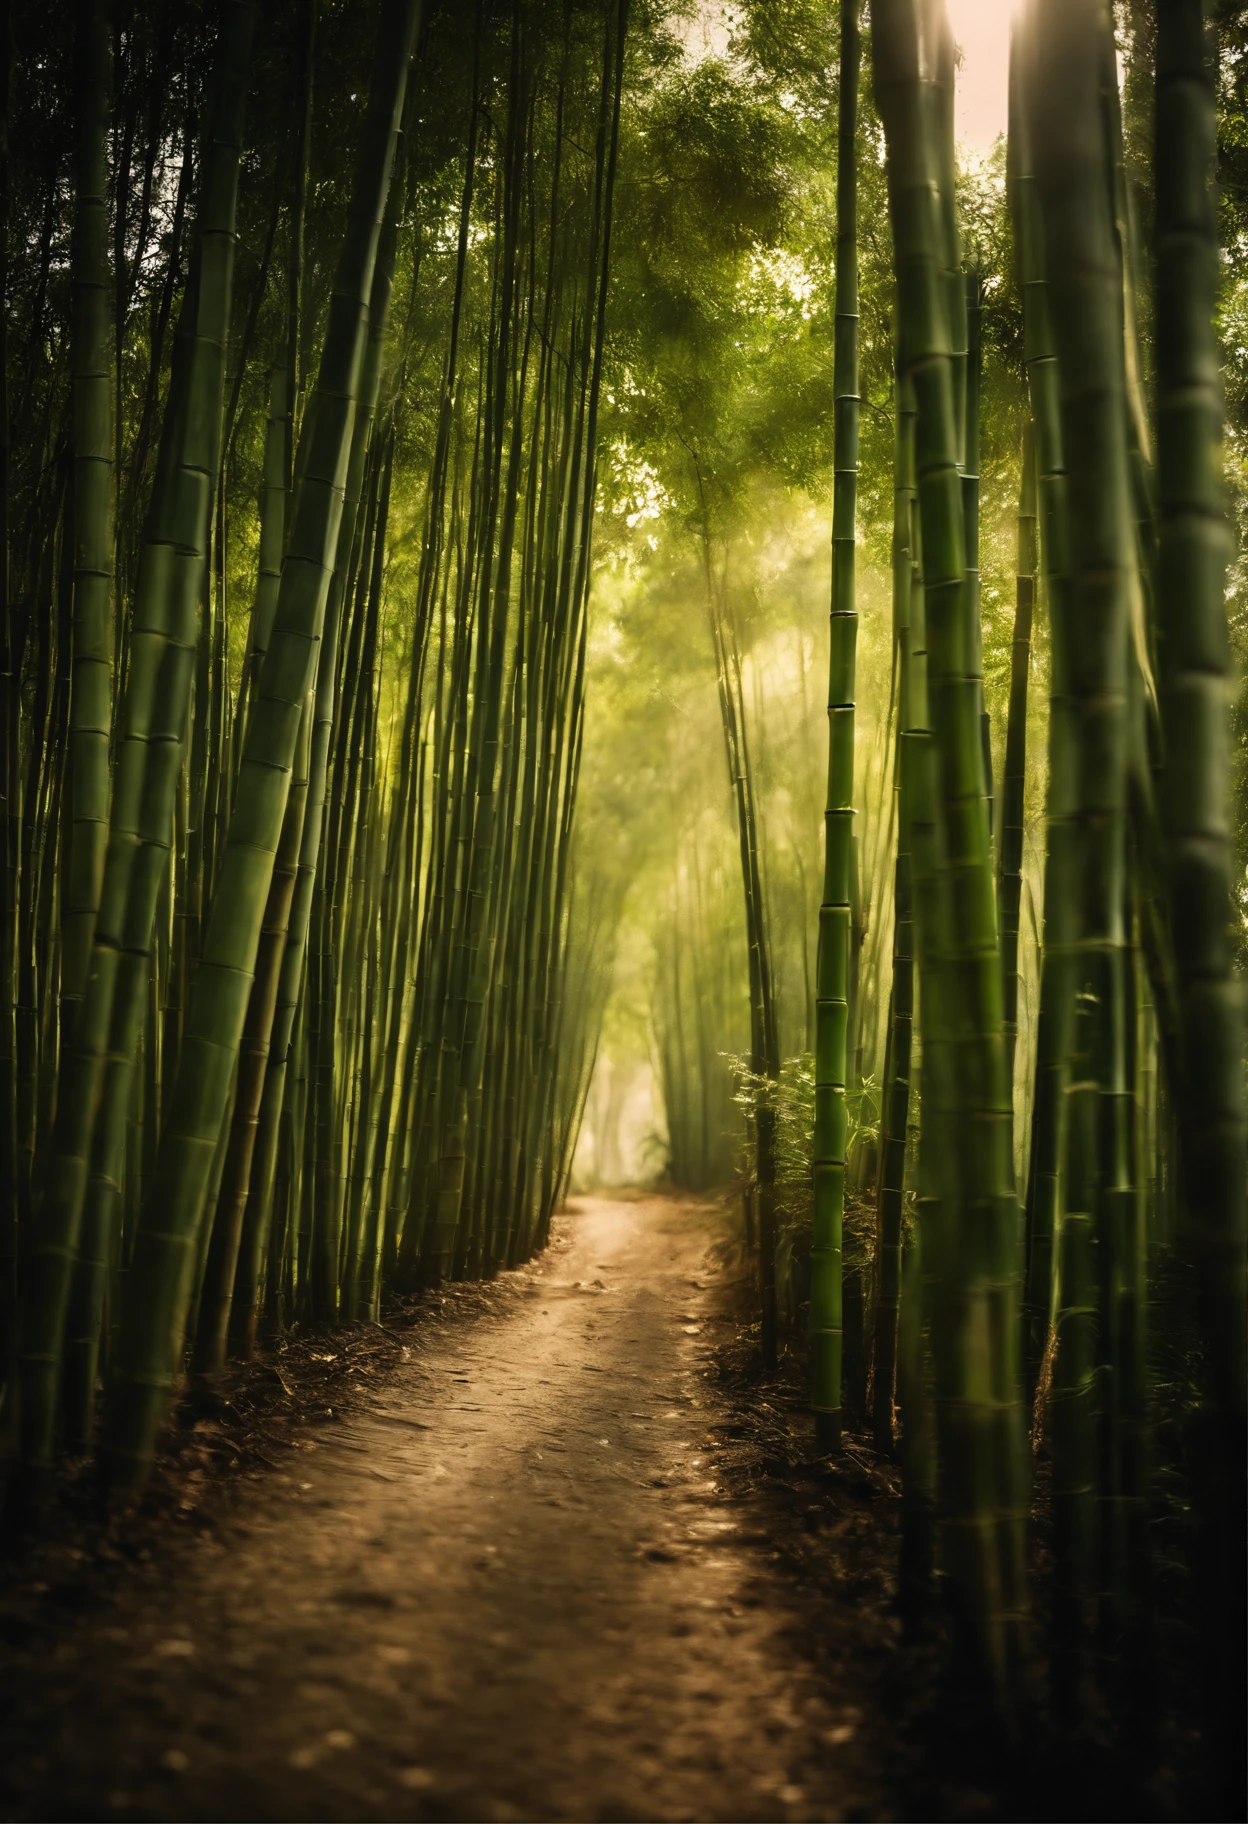 Arbusto de bambu、Uma estrada reta、oblongo、luz do sol、